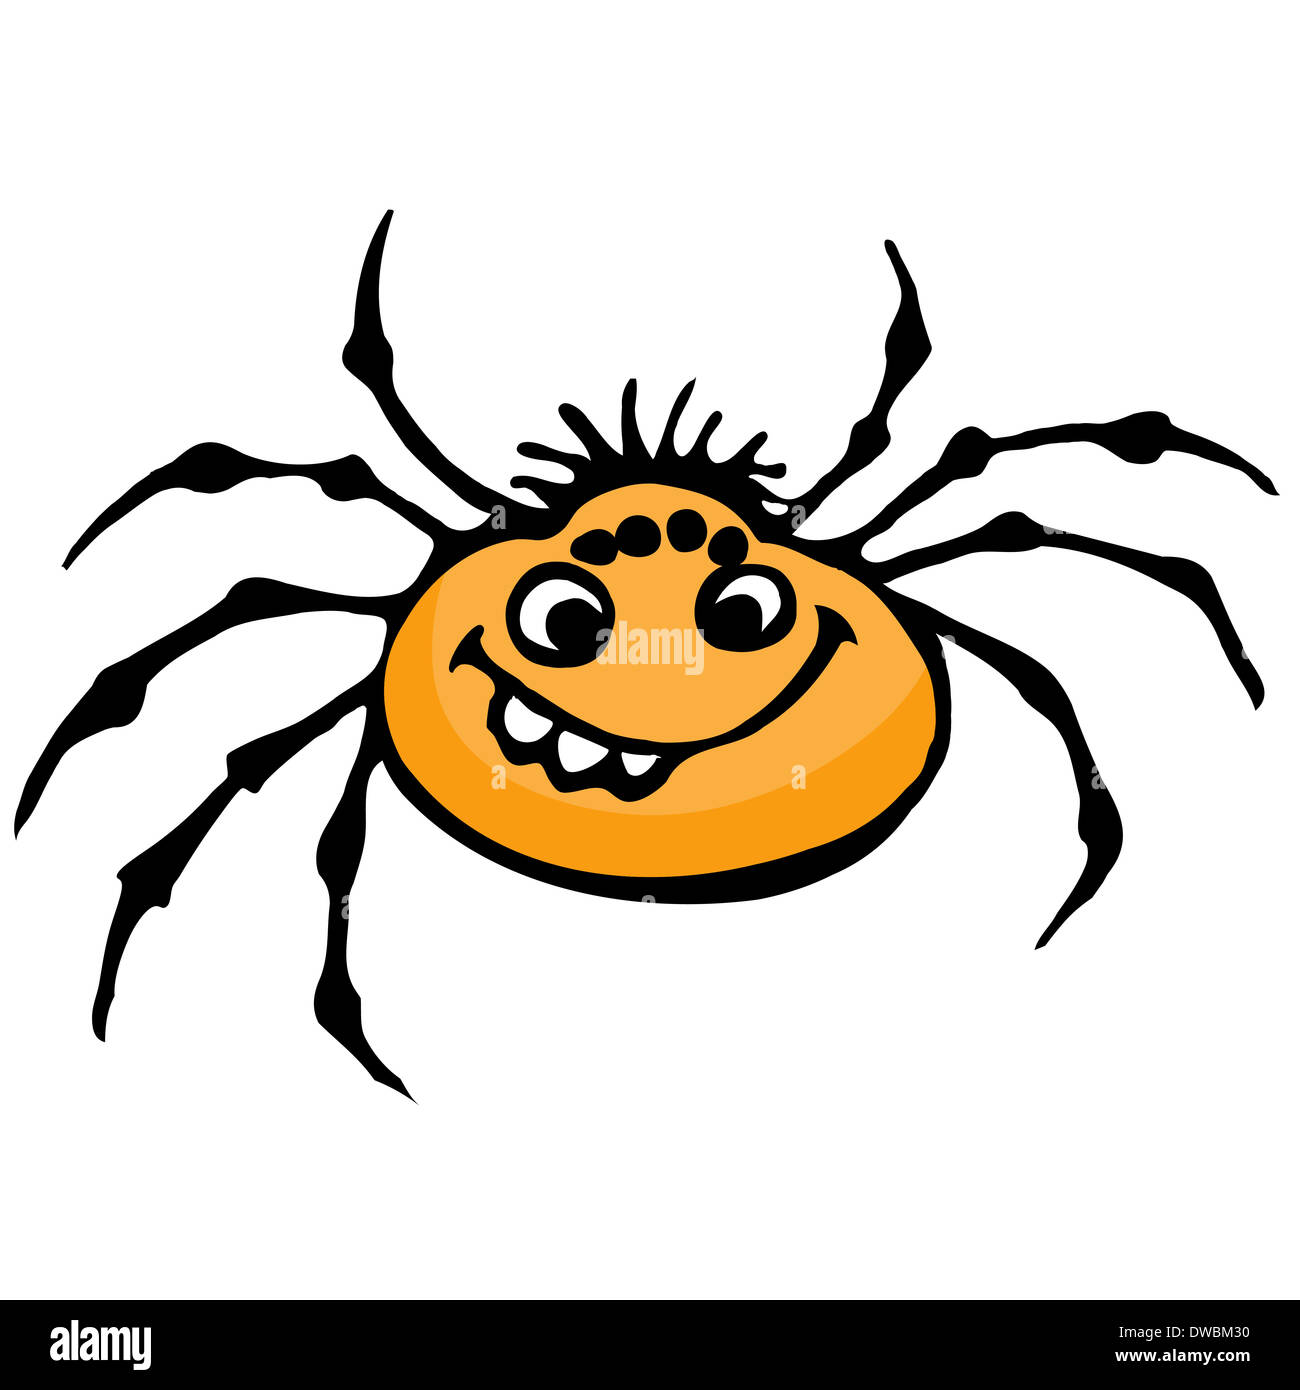 Cartoon spider. Illustration on white background for design Stock Photo